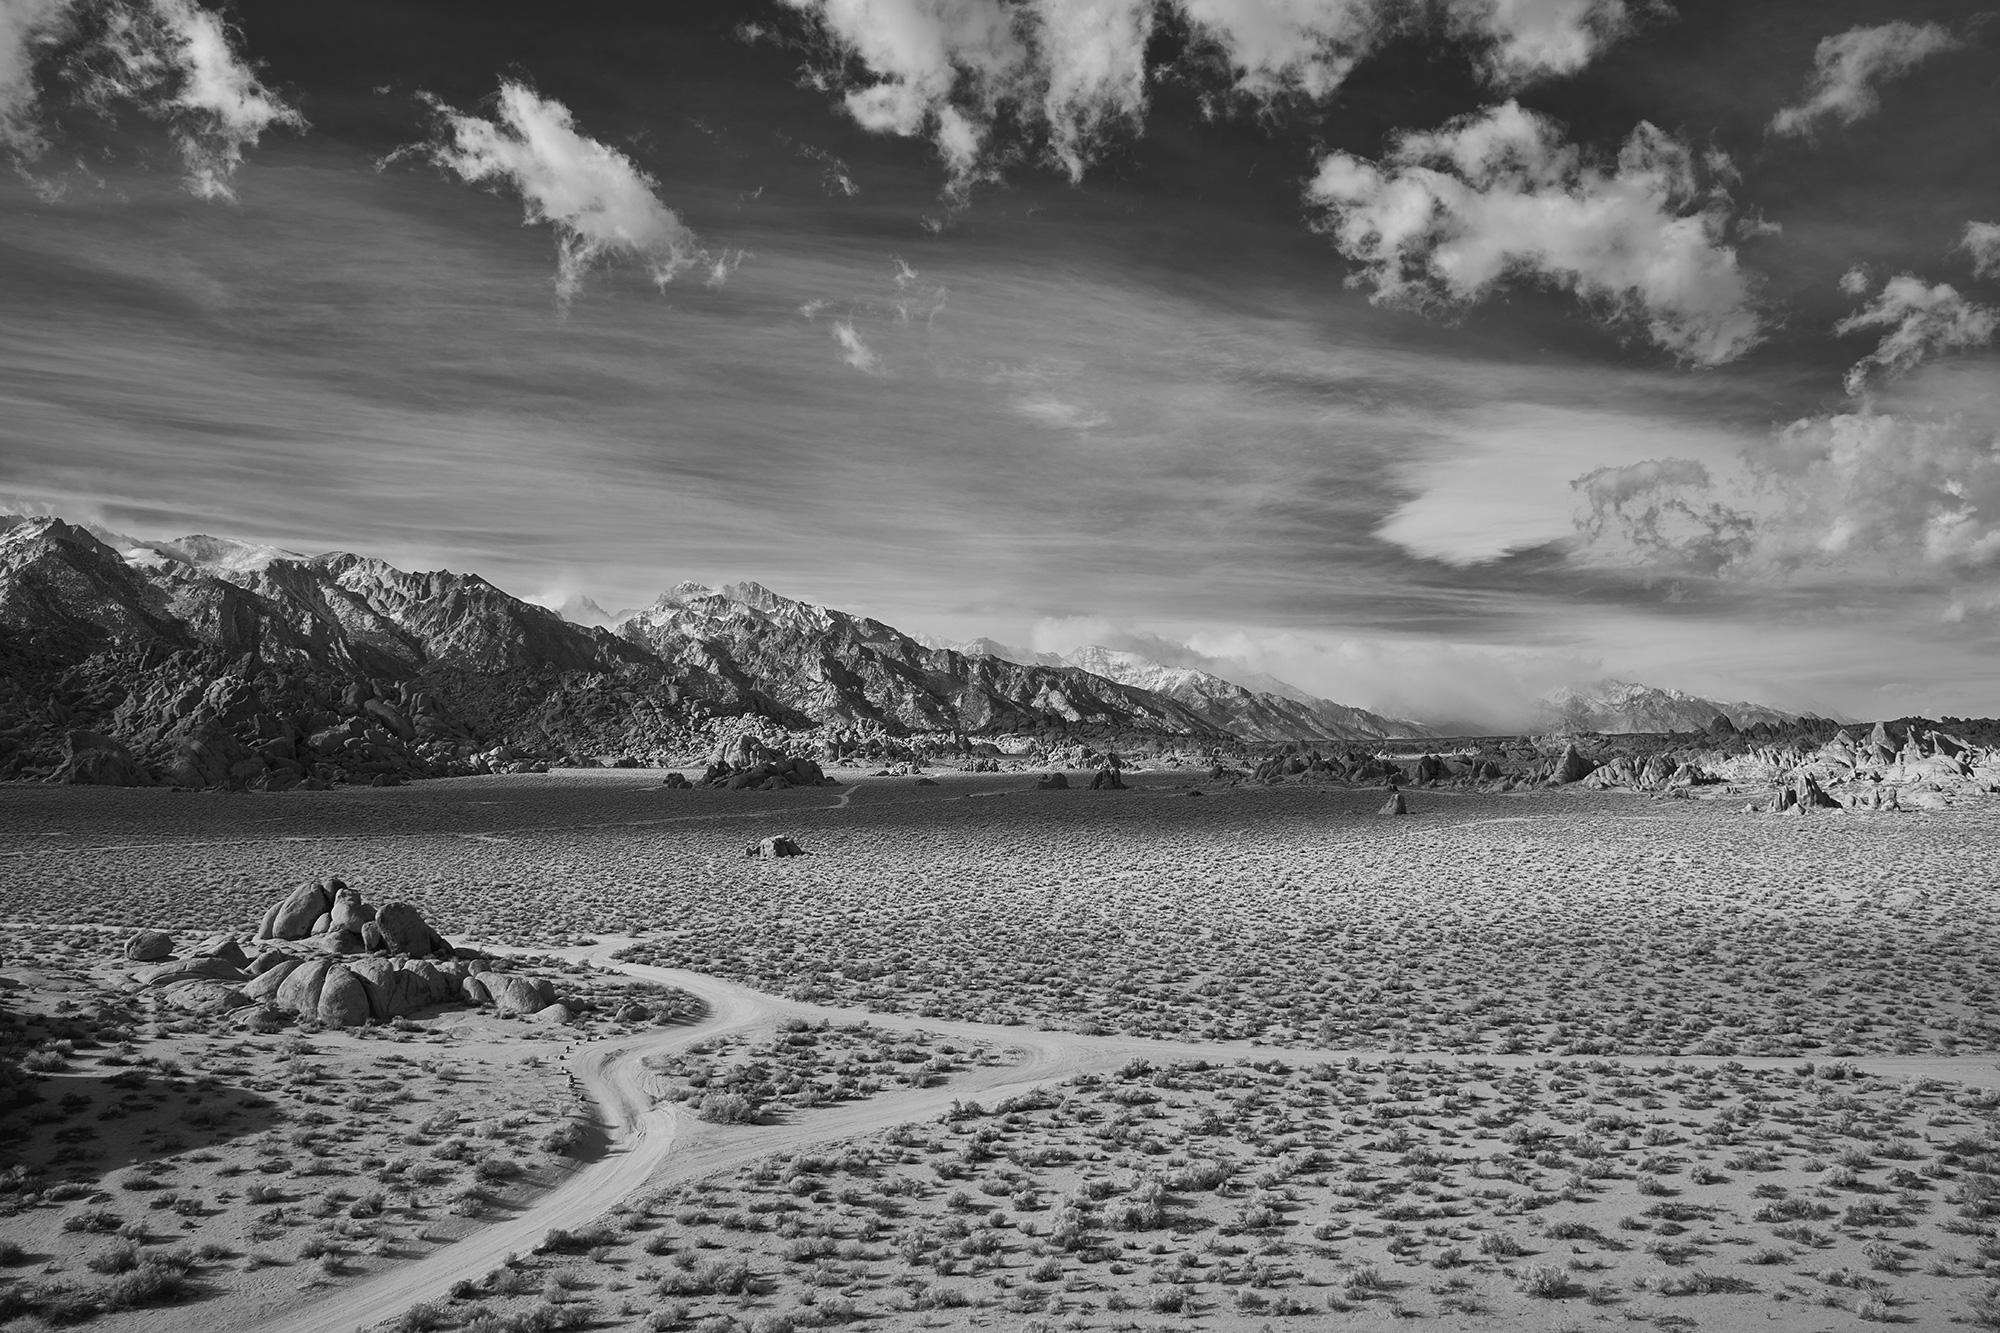 Frank Schott Landscape Photograph - Desert Crossing - large scale photograph of dramatic desert landscape